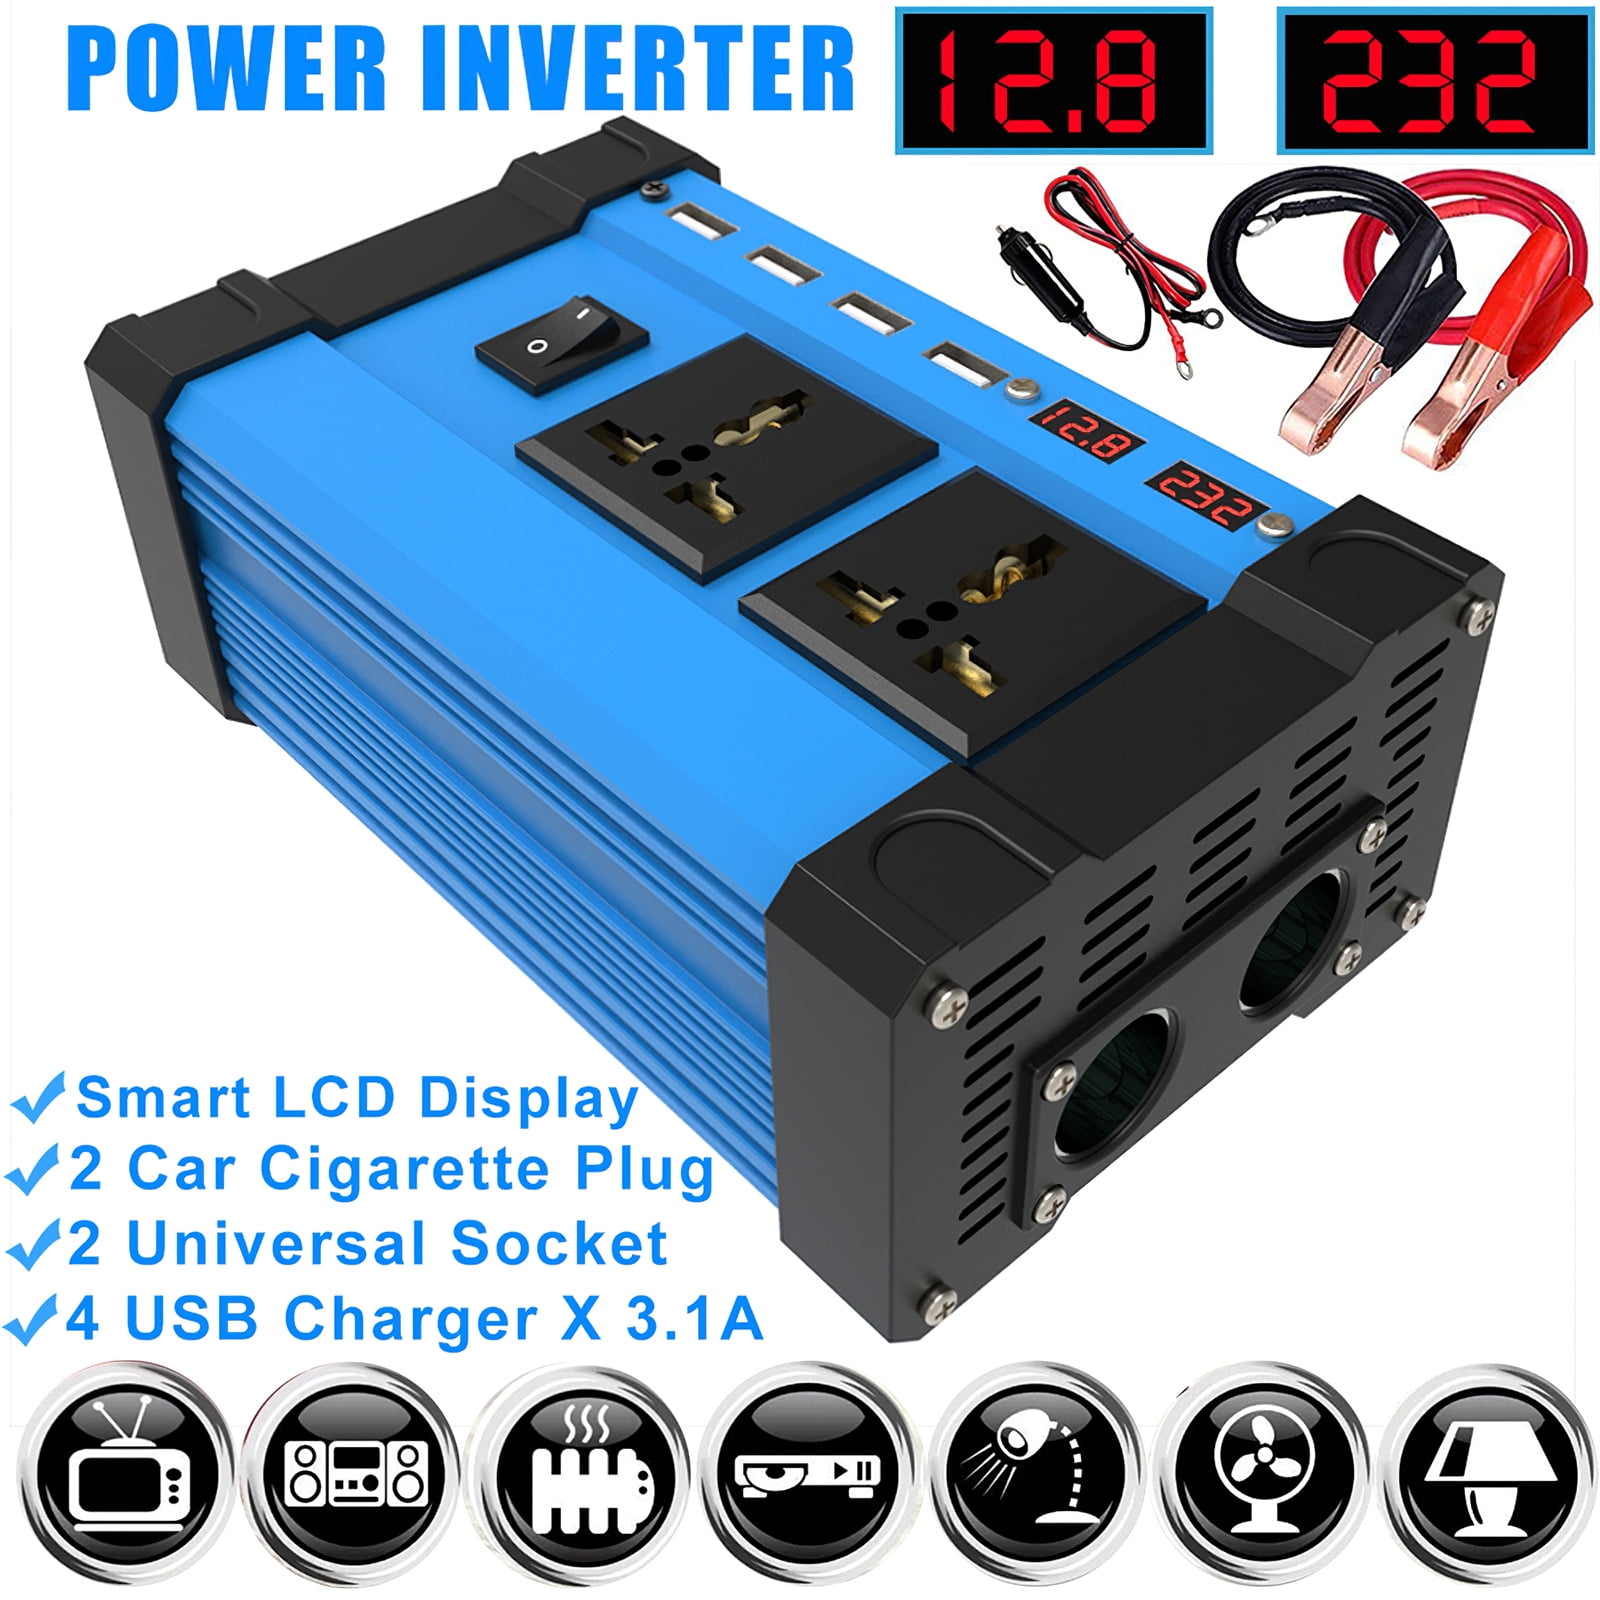 4x Autocare 150w Power Inverter 12v To 240v Converter Consoles TV Laptops 